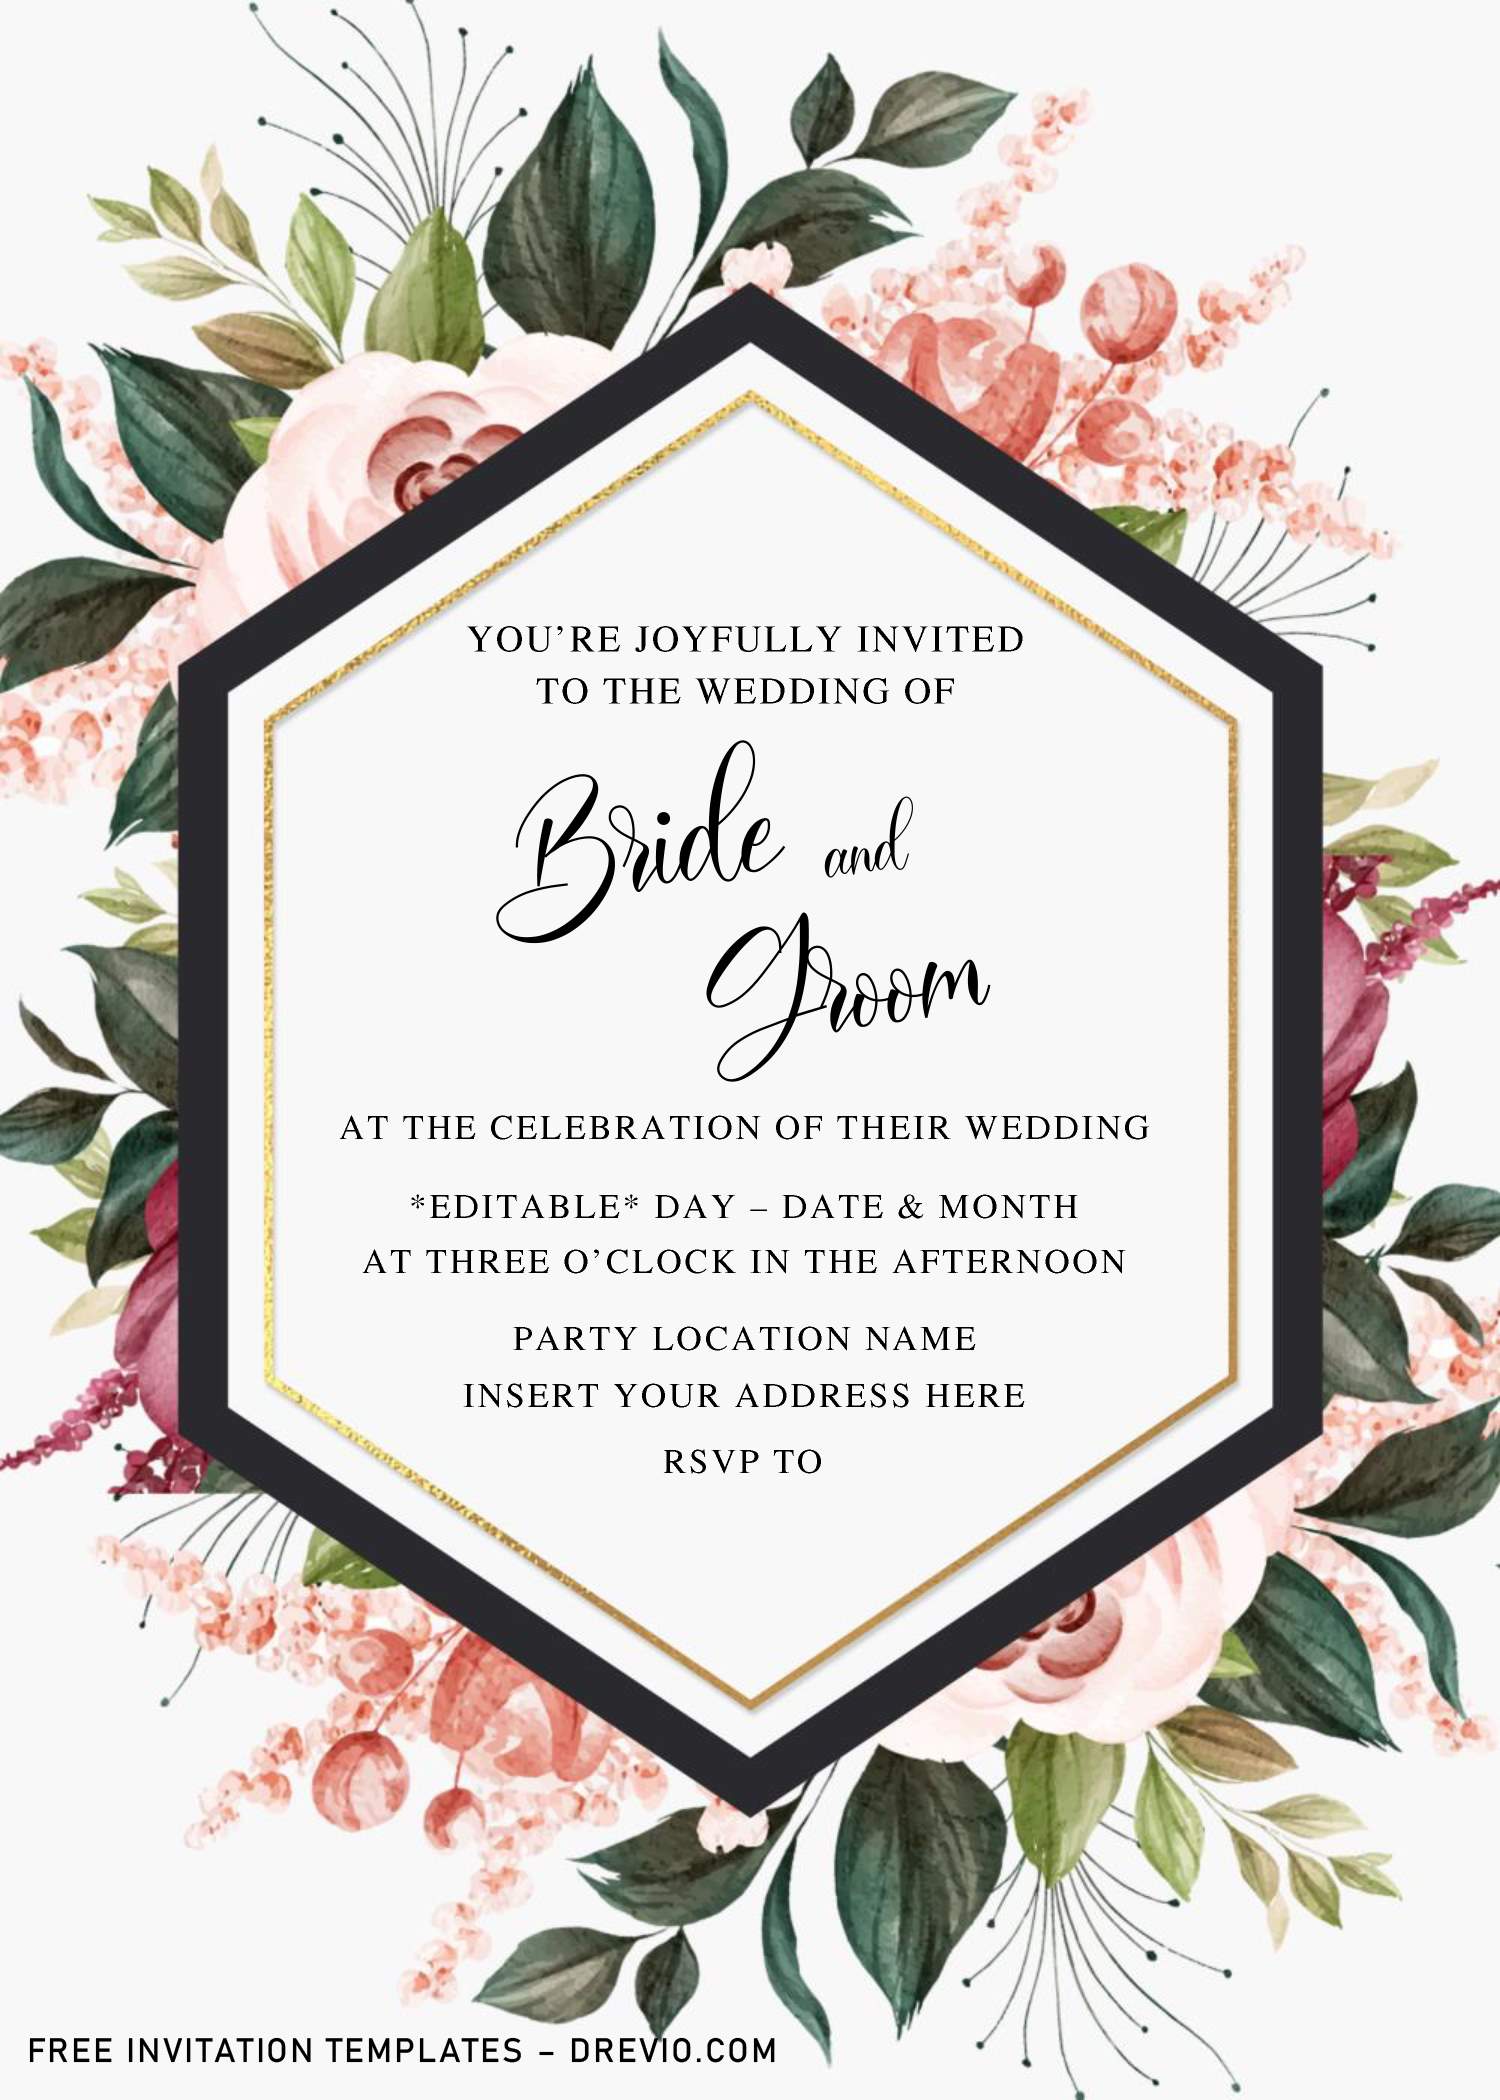 Free Wedding Invitation Templates Floral FREE PRINTABLE TEMPLATES